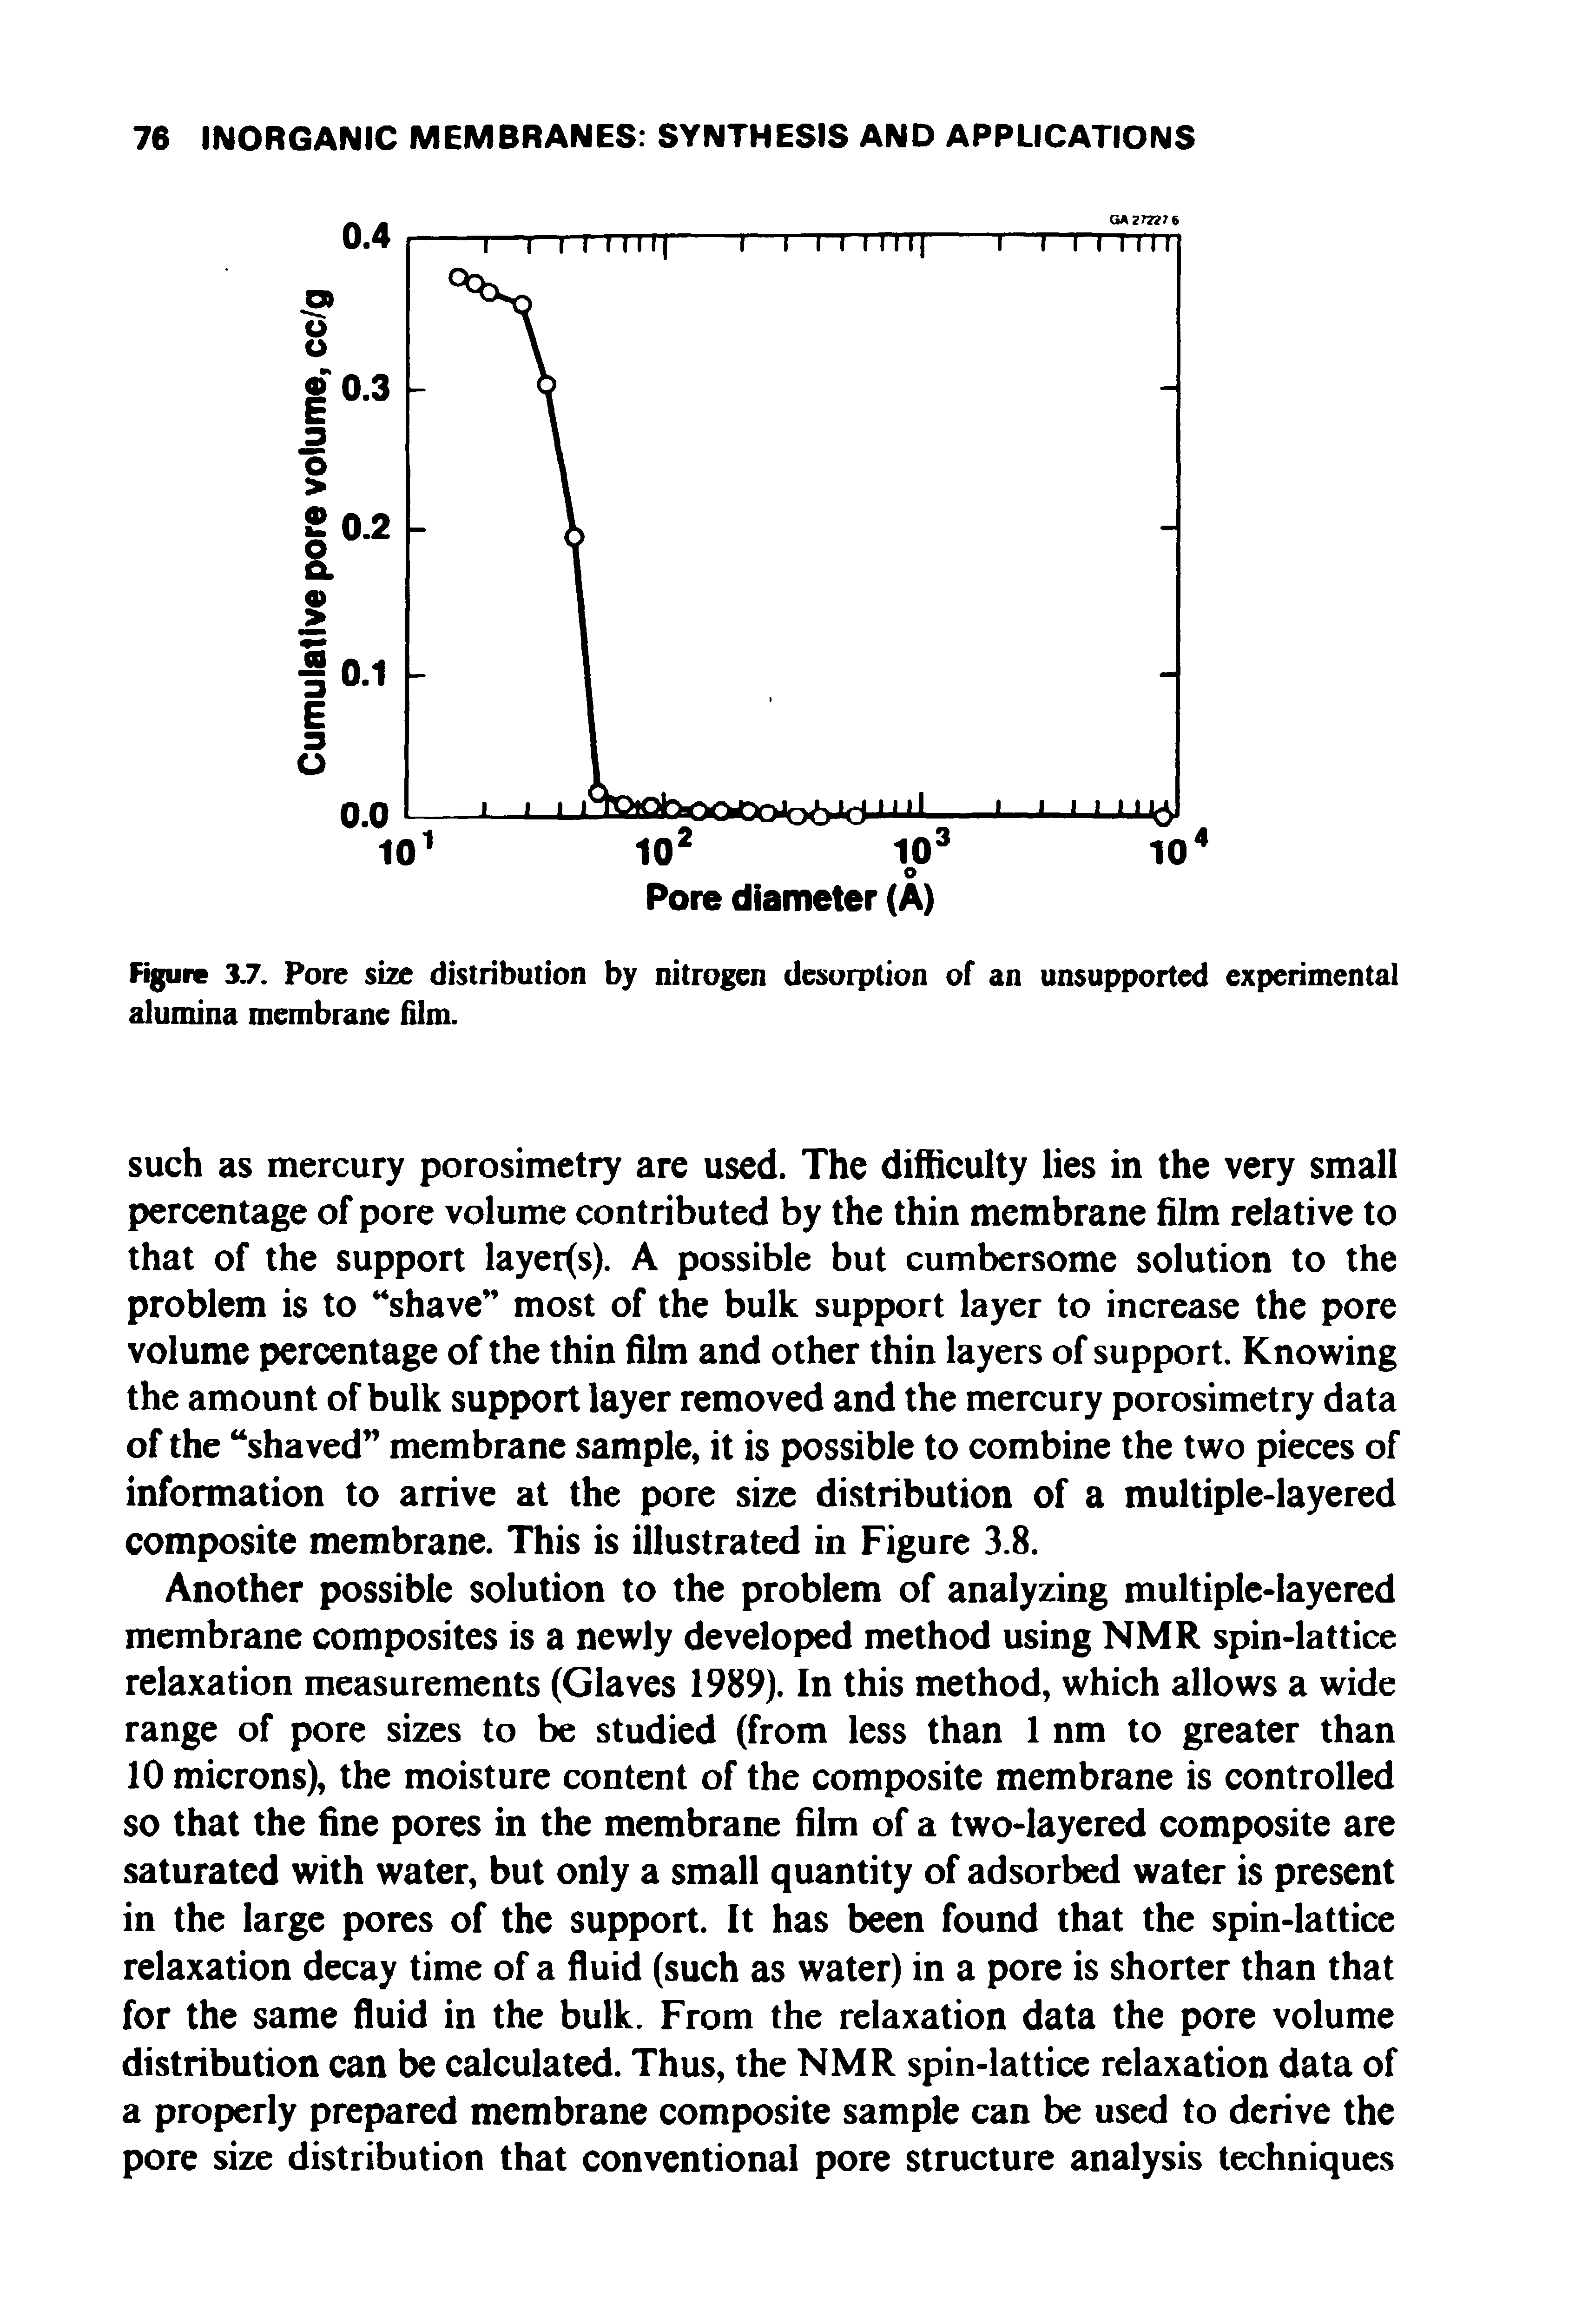 Figure 3.7. Pore size distribution by nitrogen desorption of an unsupported experimental alumina membrane film.